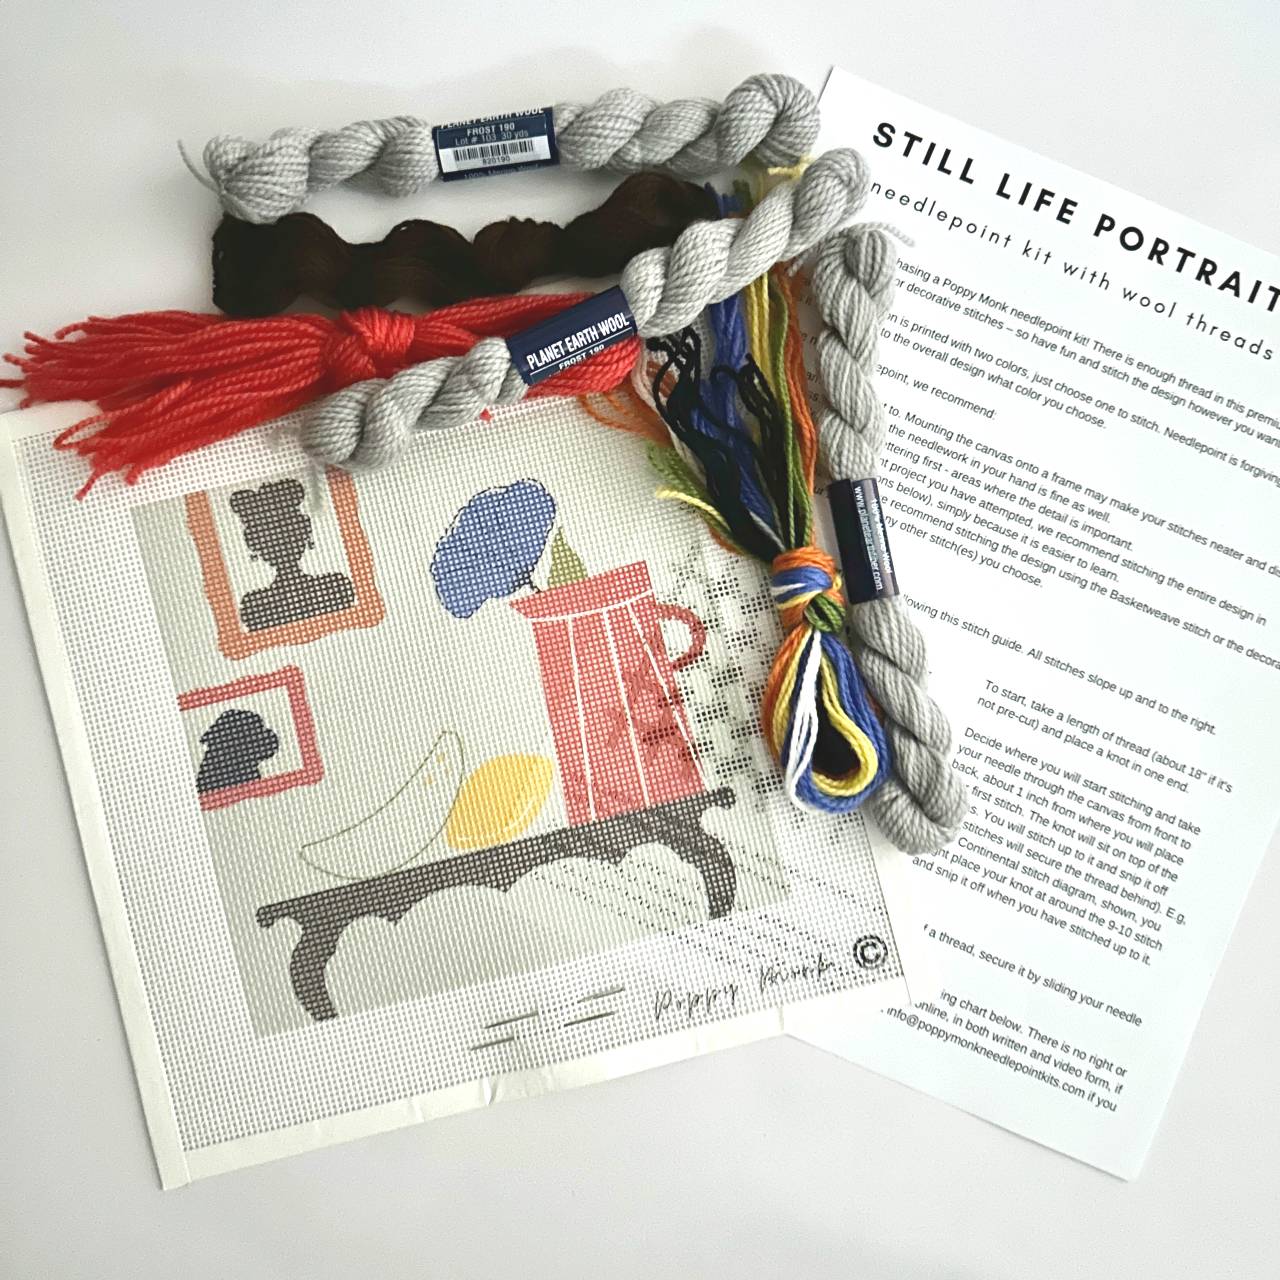 Still Life Portraits needlepoint kit with wool yarns